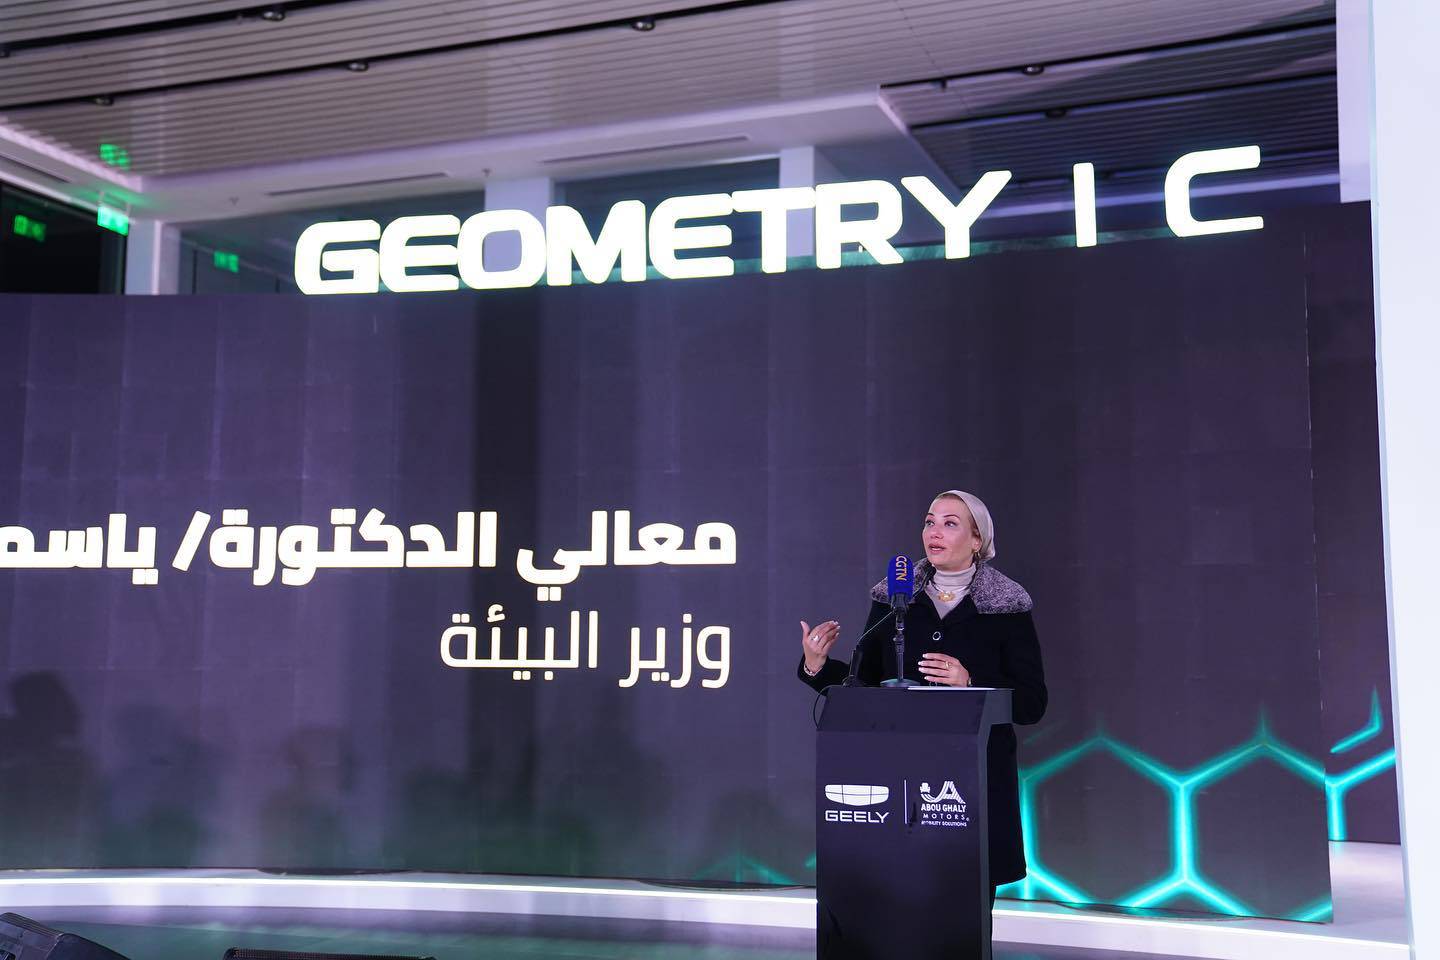 Umweltministerin Yasmin Fouad sprach bei der Enthüllung des Elektroautos Geometry C in Ägypten.  Foto: Abu Ghaly Motors